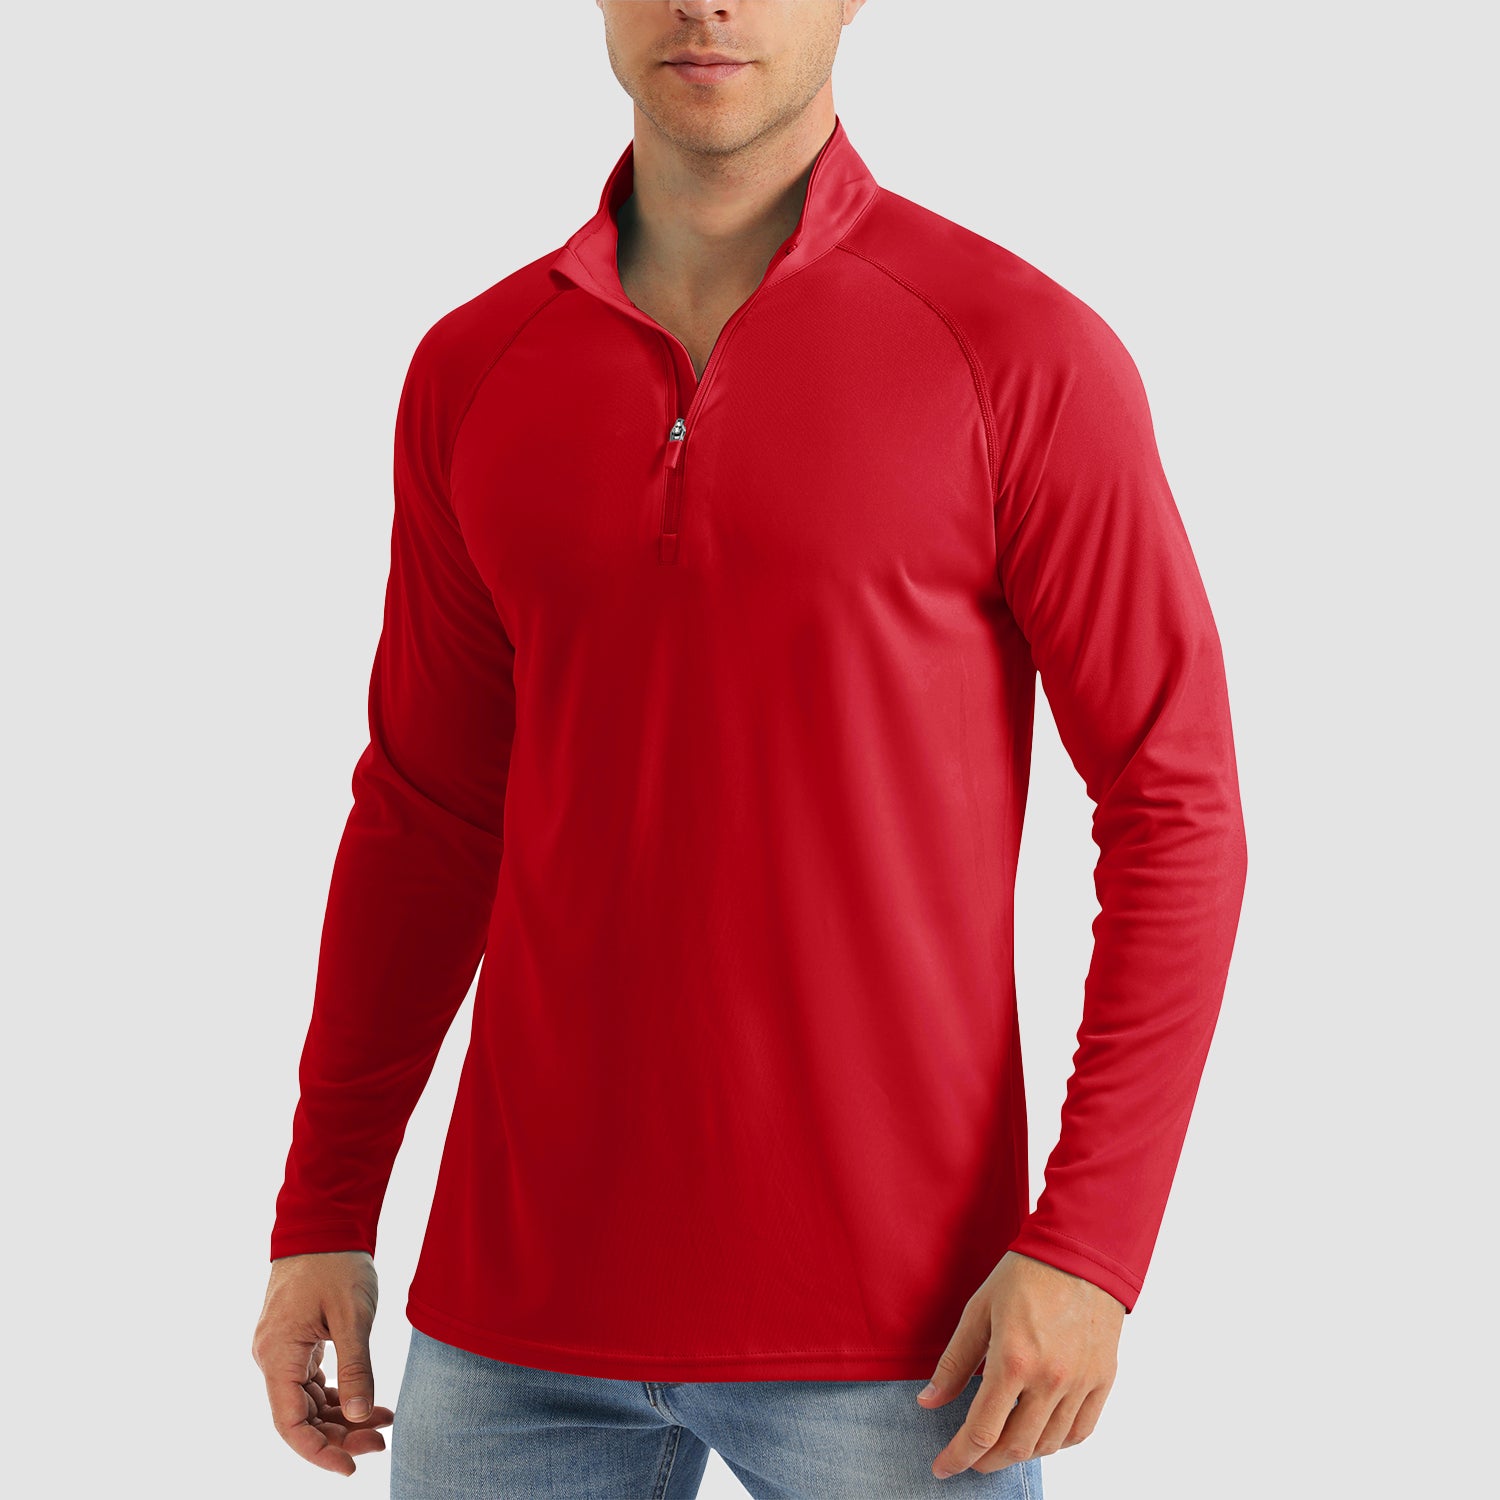 Men's Long Sleeve Shirt UPF 50 Quick Dry for Outdoor Sports – MAGCOMSEN